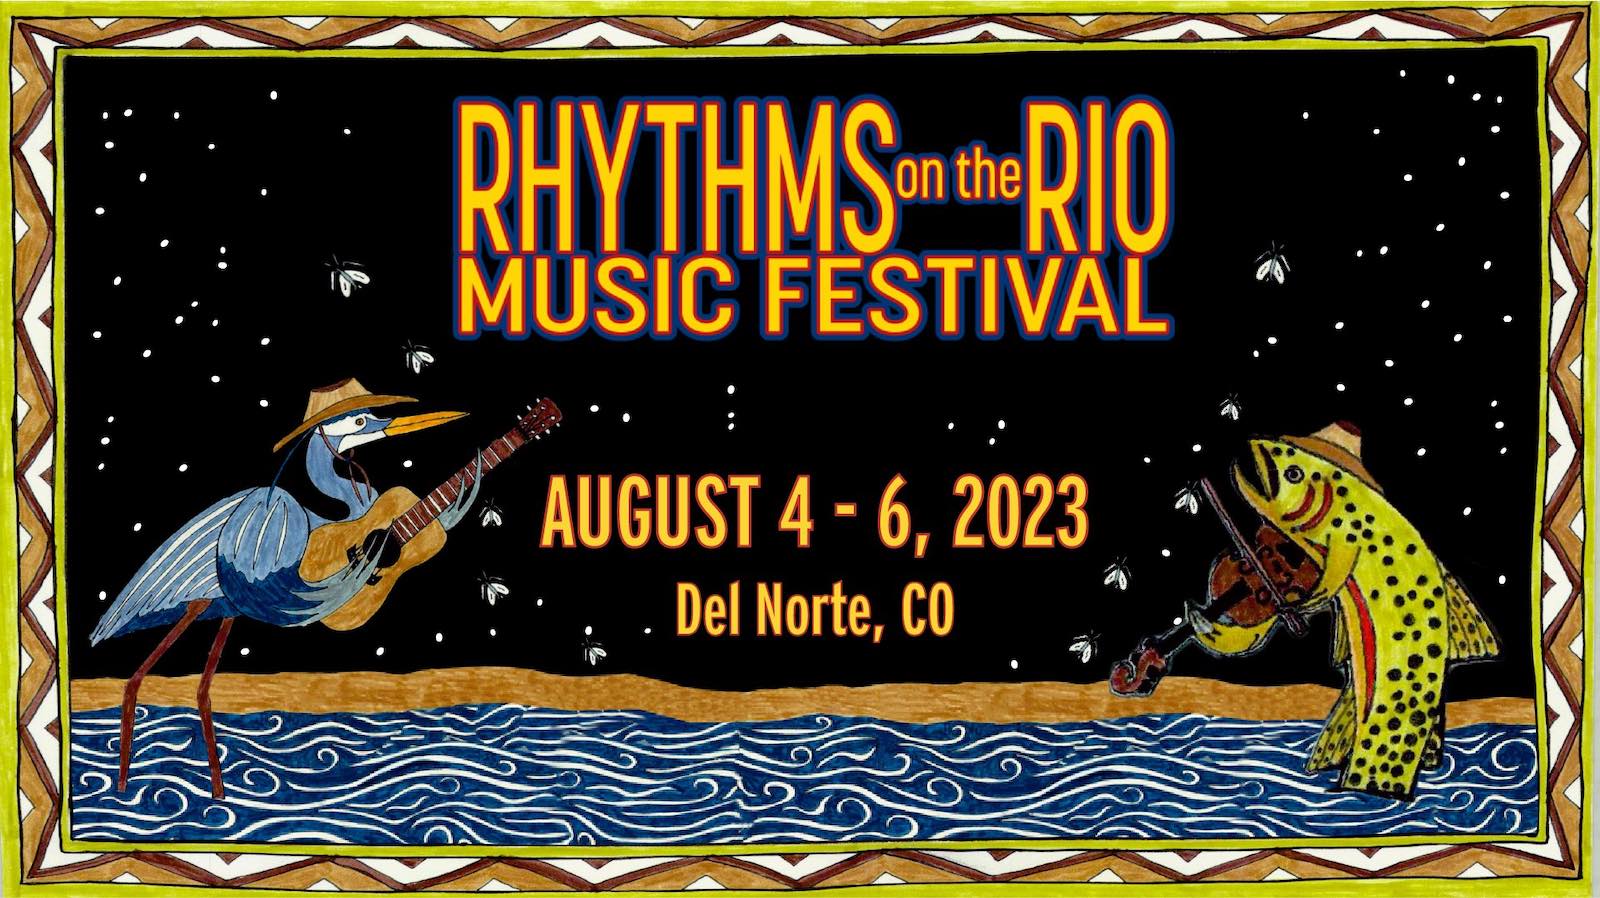 Rhythms on the Rio Music Festival Rhythms on the Rio